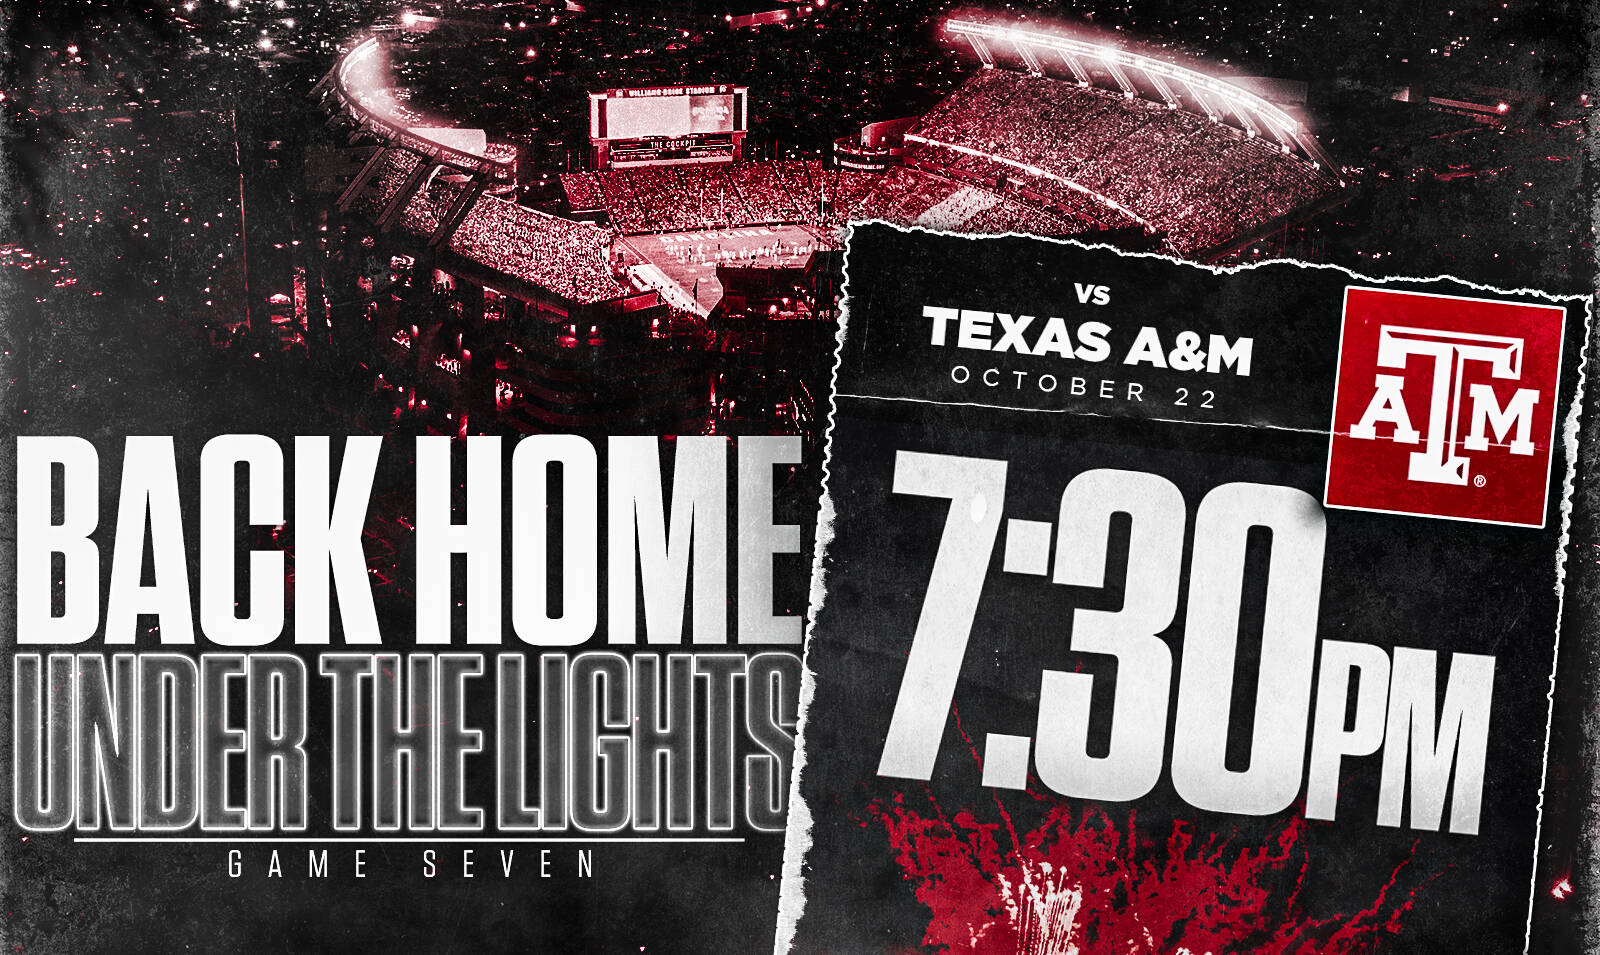 Gamecocks Host Texas A&M Saturday Night